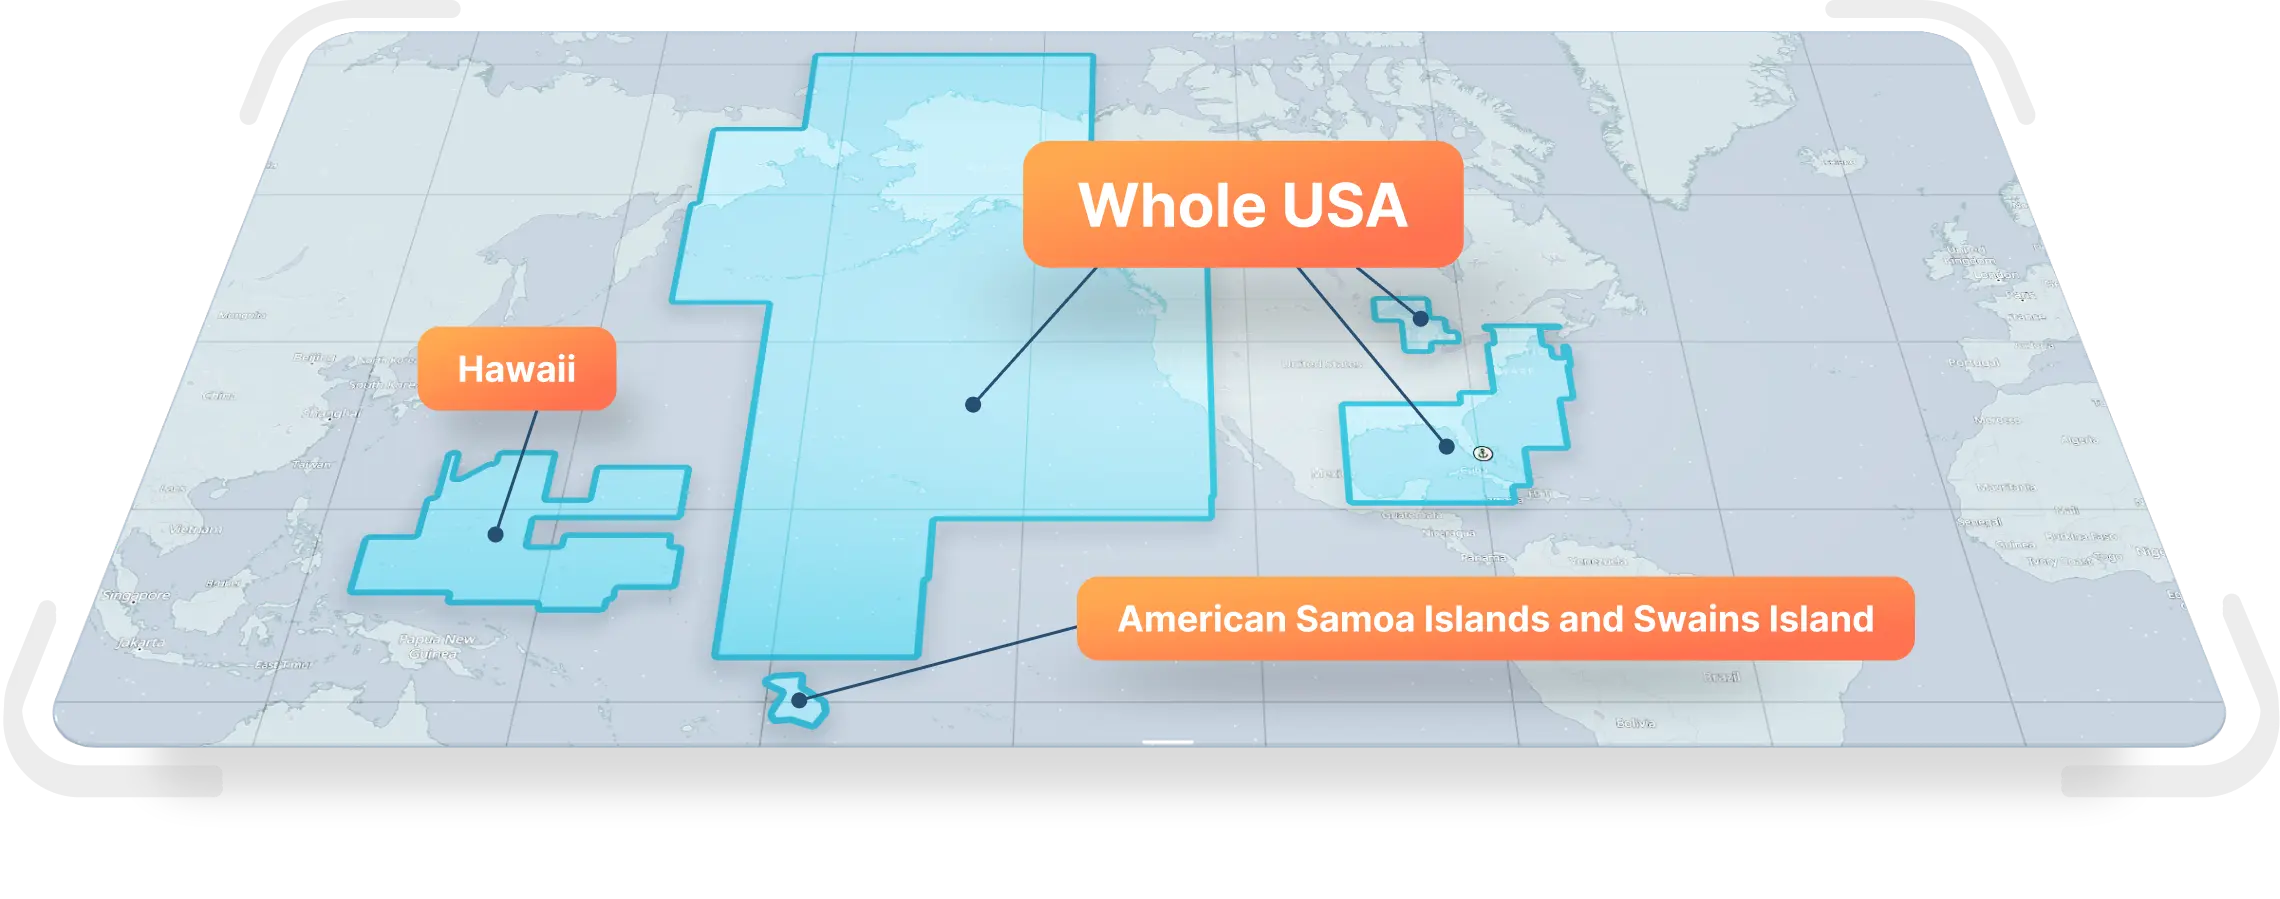 coverage: USA, Hawaii, Samoa islands and Swains island